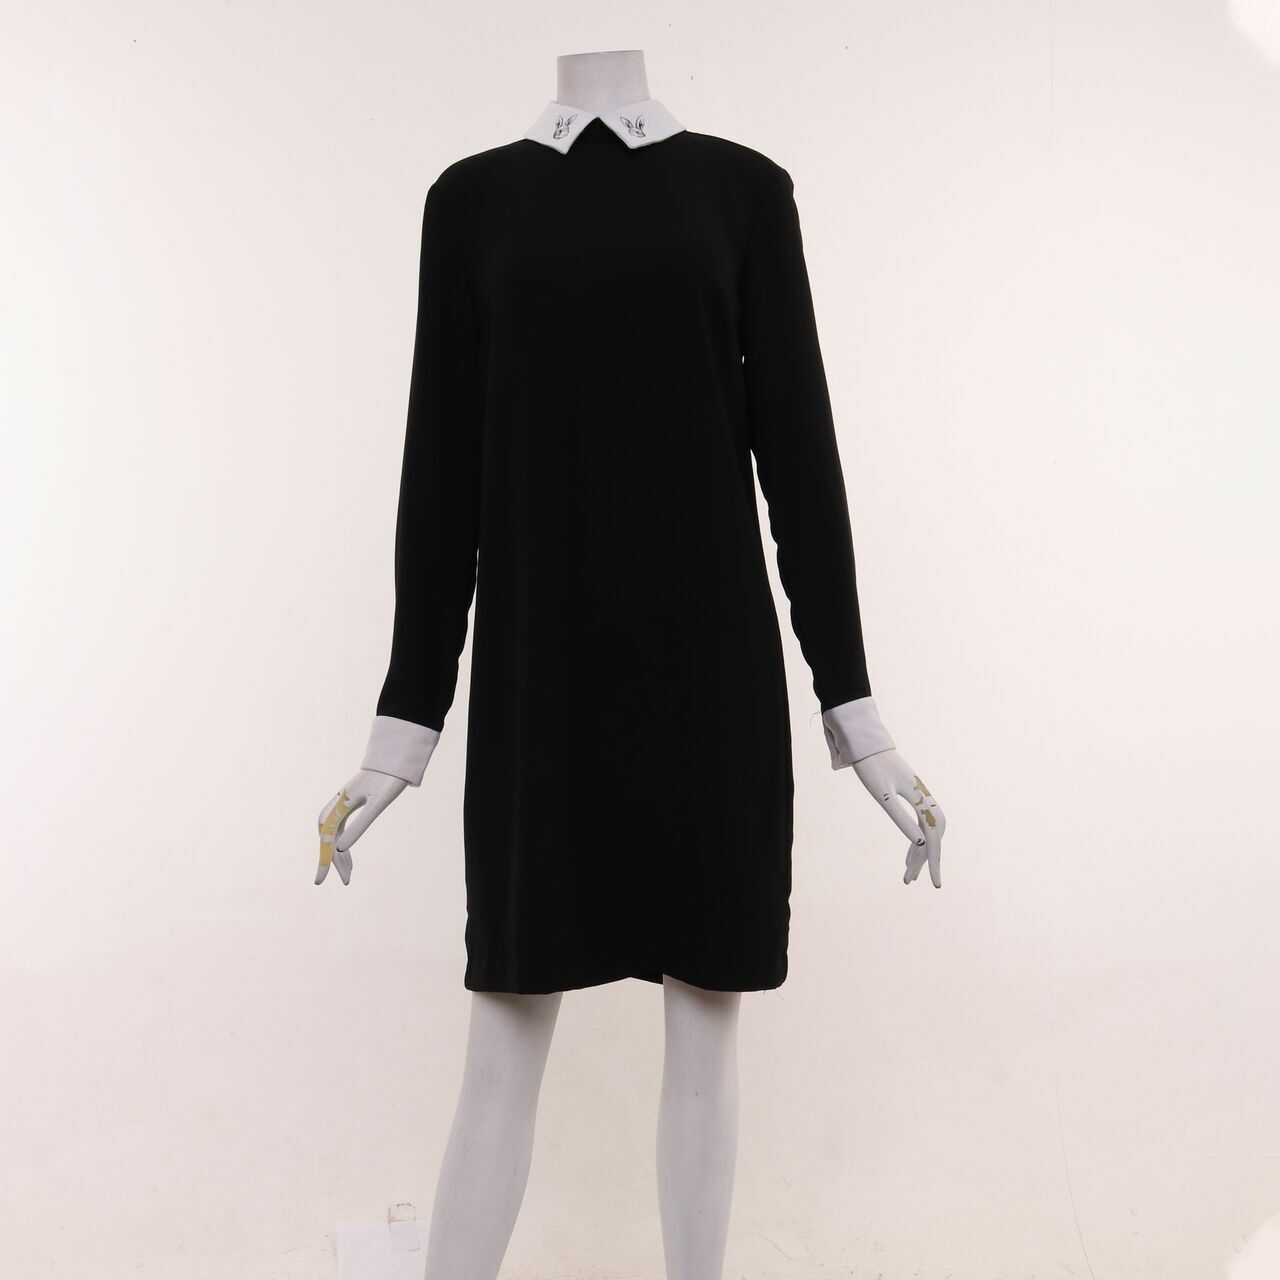 Victoria Beckham For Target Black Shirt Mini Dress